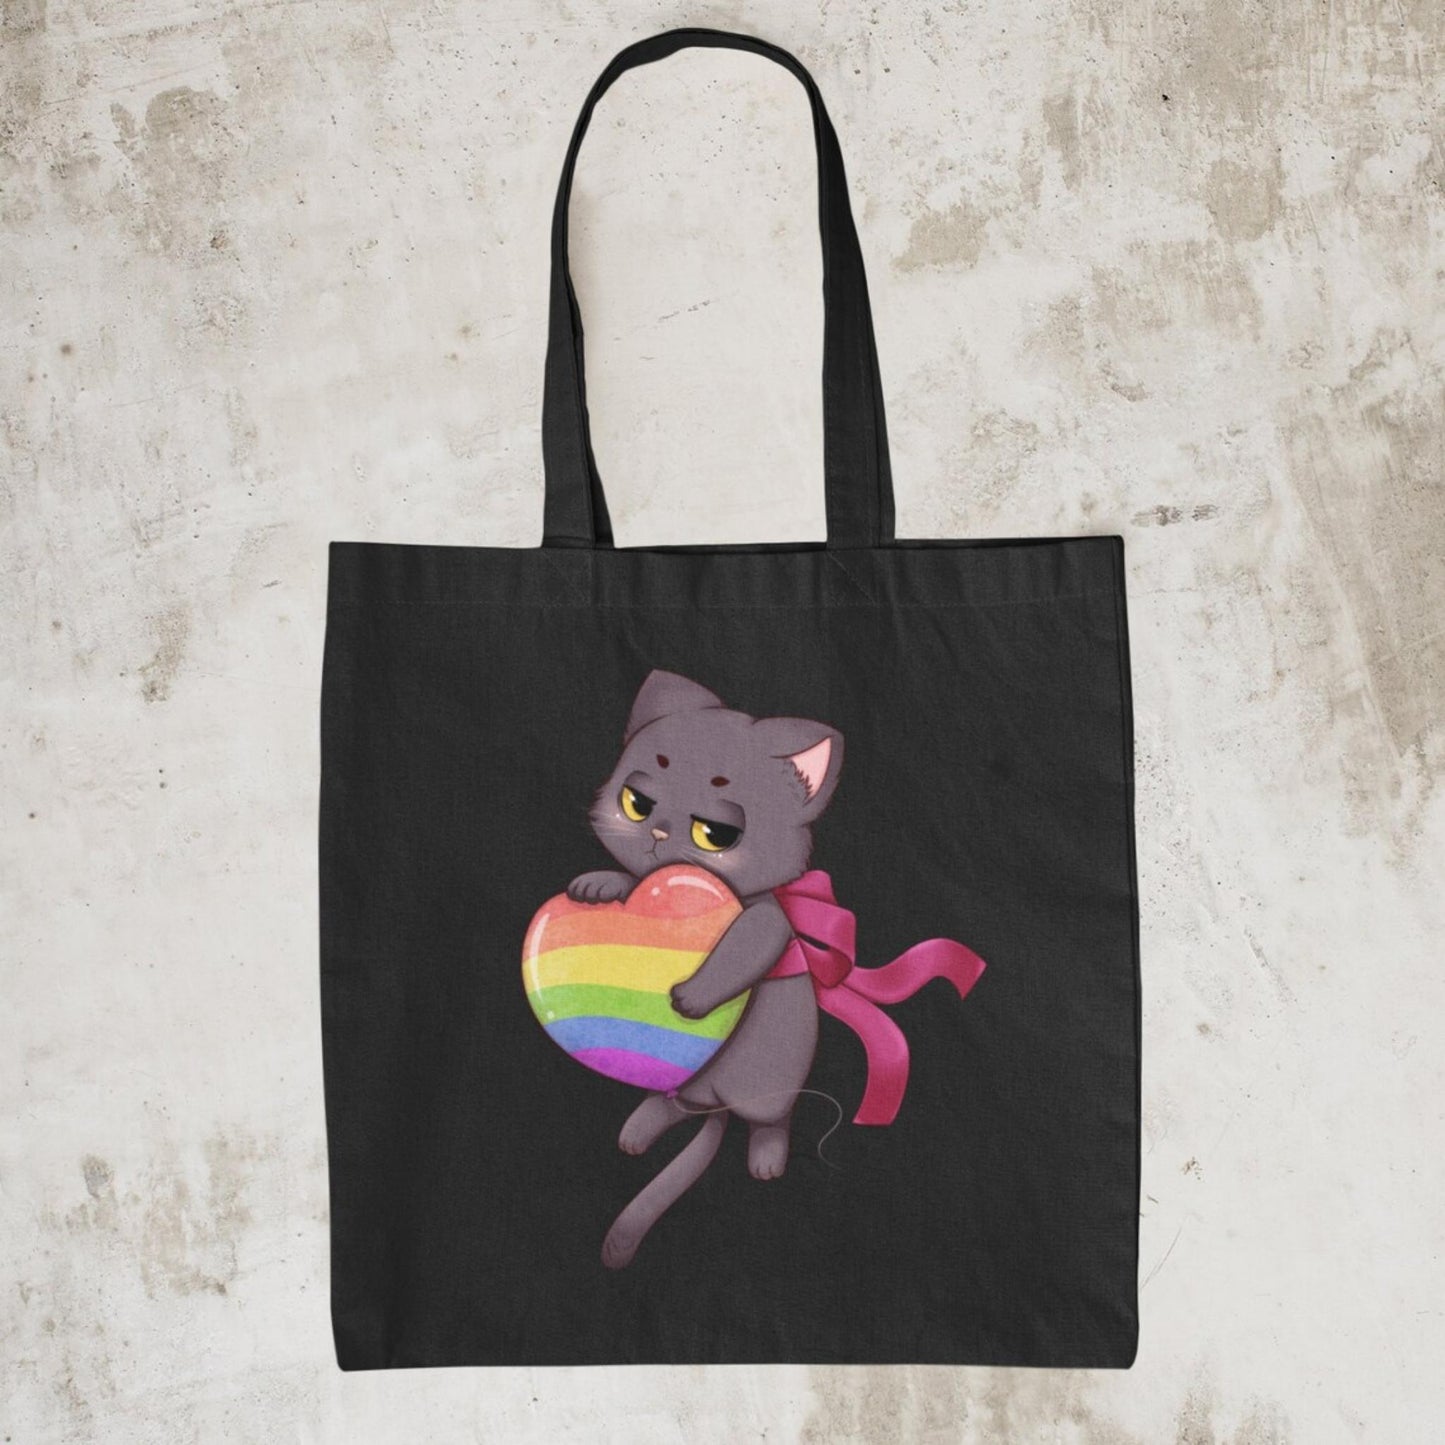 Hidekos Artwork - LGBTQ Love is Love Pride Neko Stofftasche